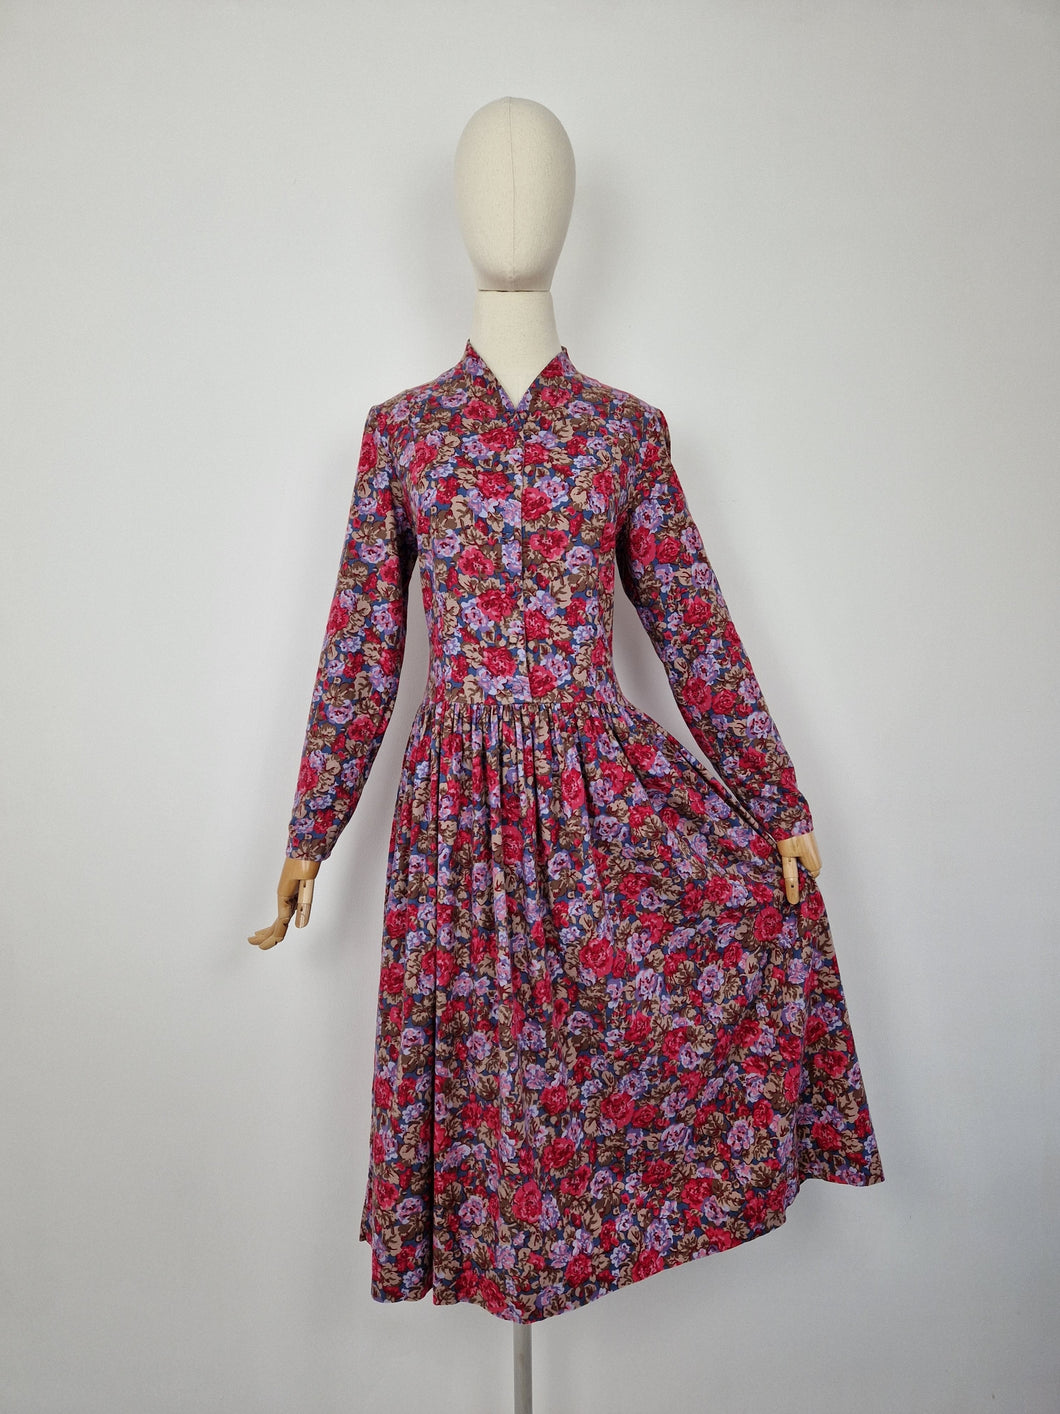 Vintage 80s Laura Ashley floral dress